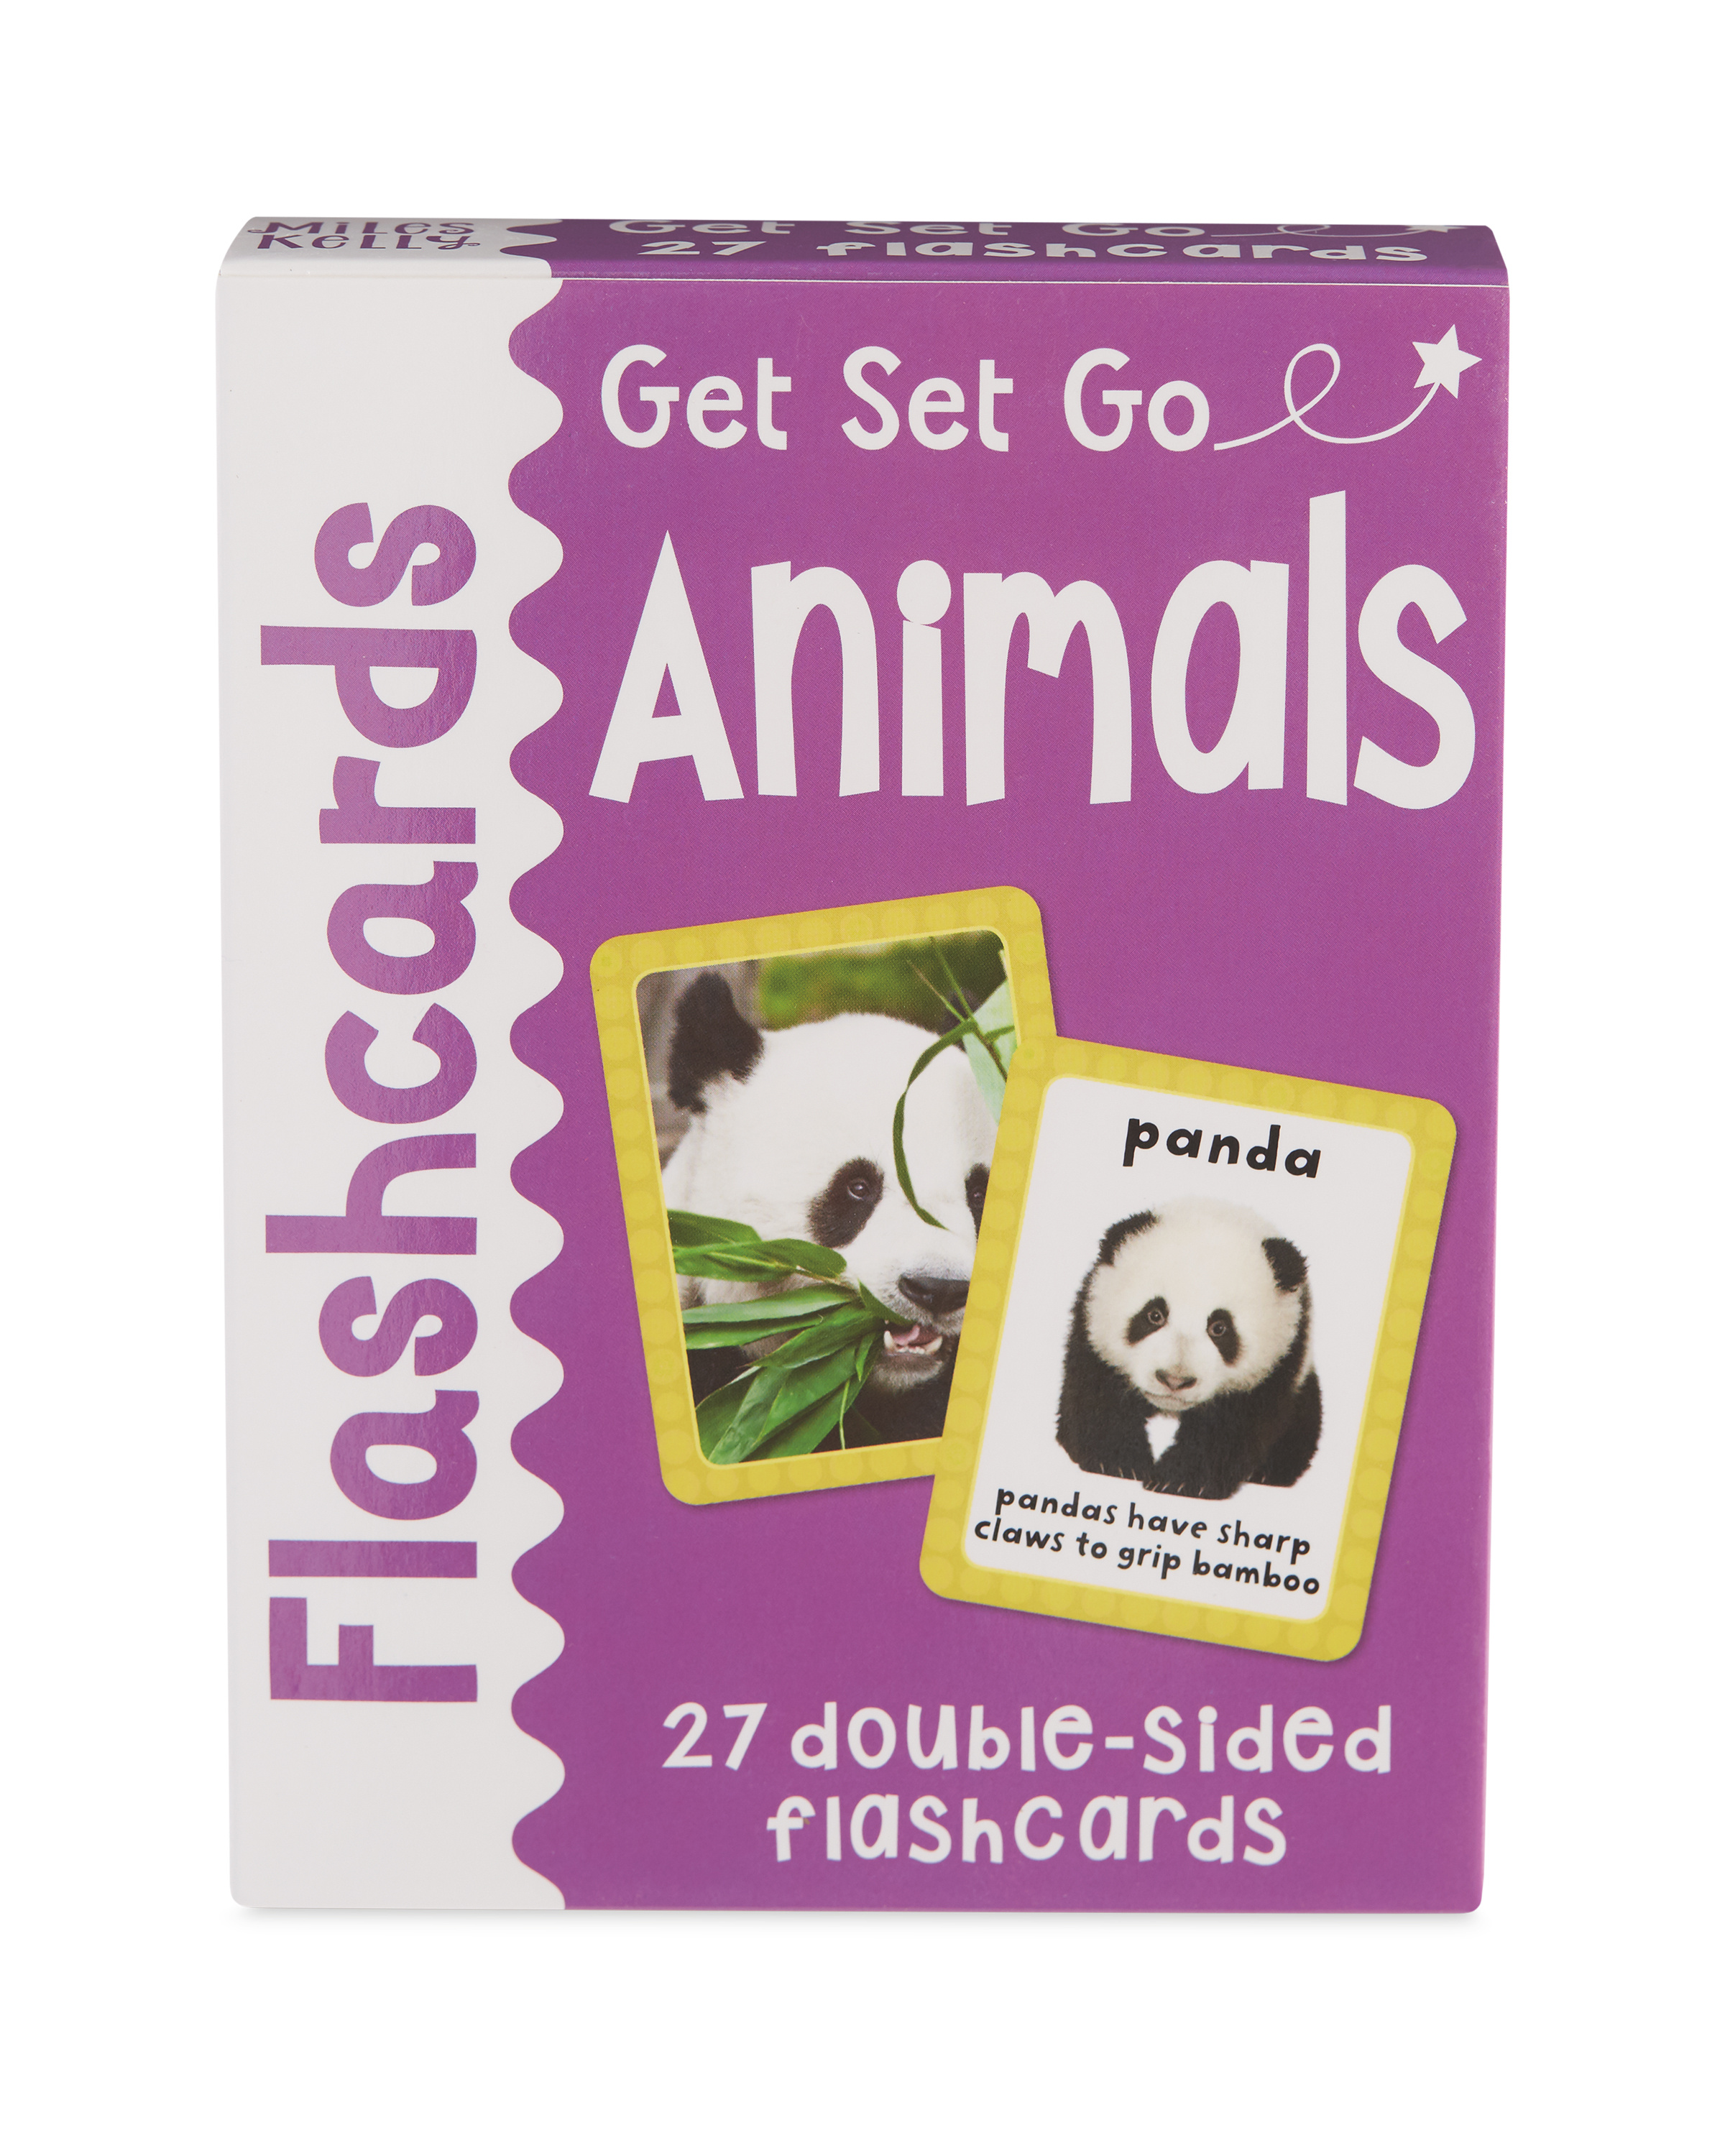 Get Set Go Animals Flashcards - ALDI UK